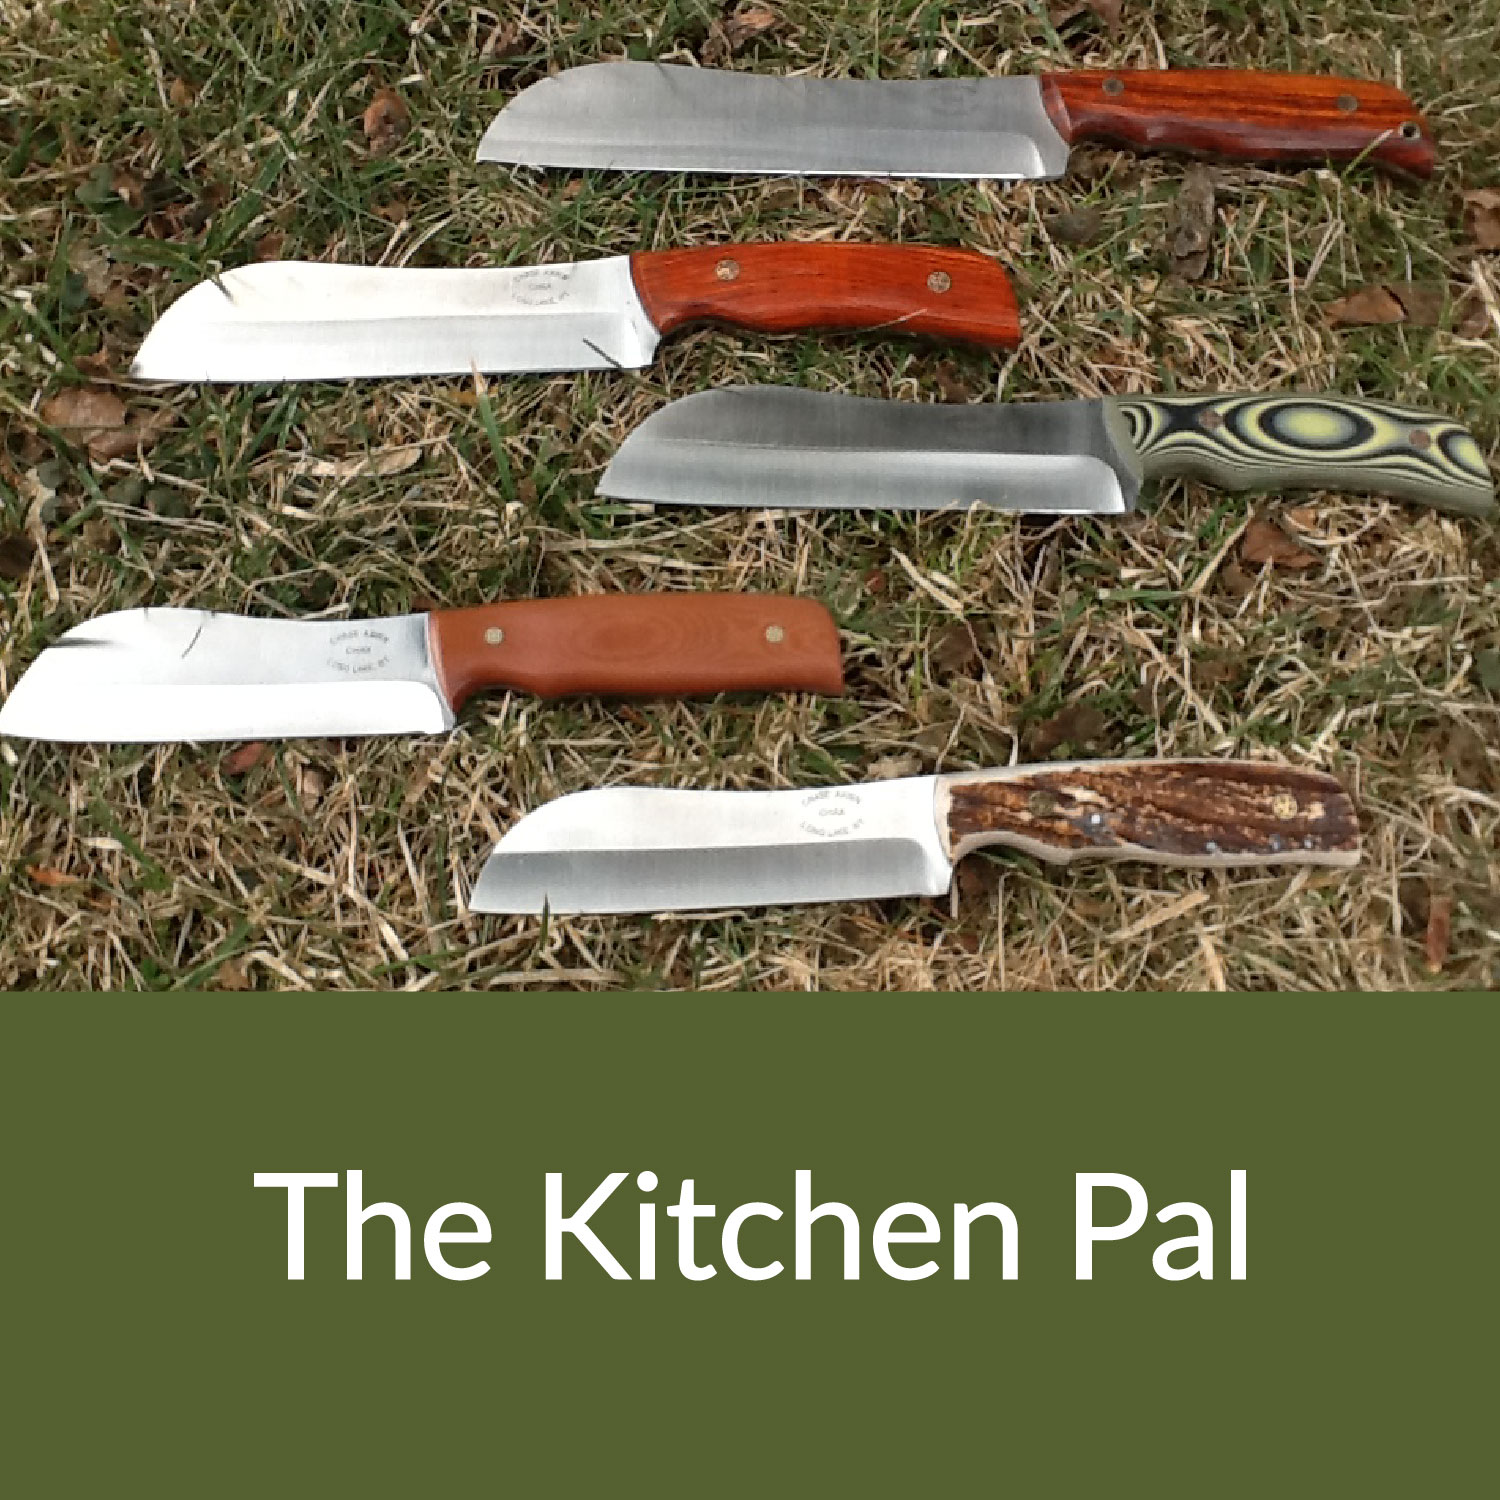 The Kitchen Pal